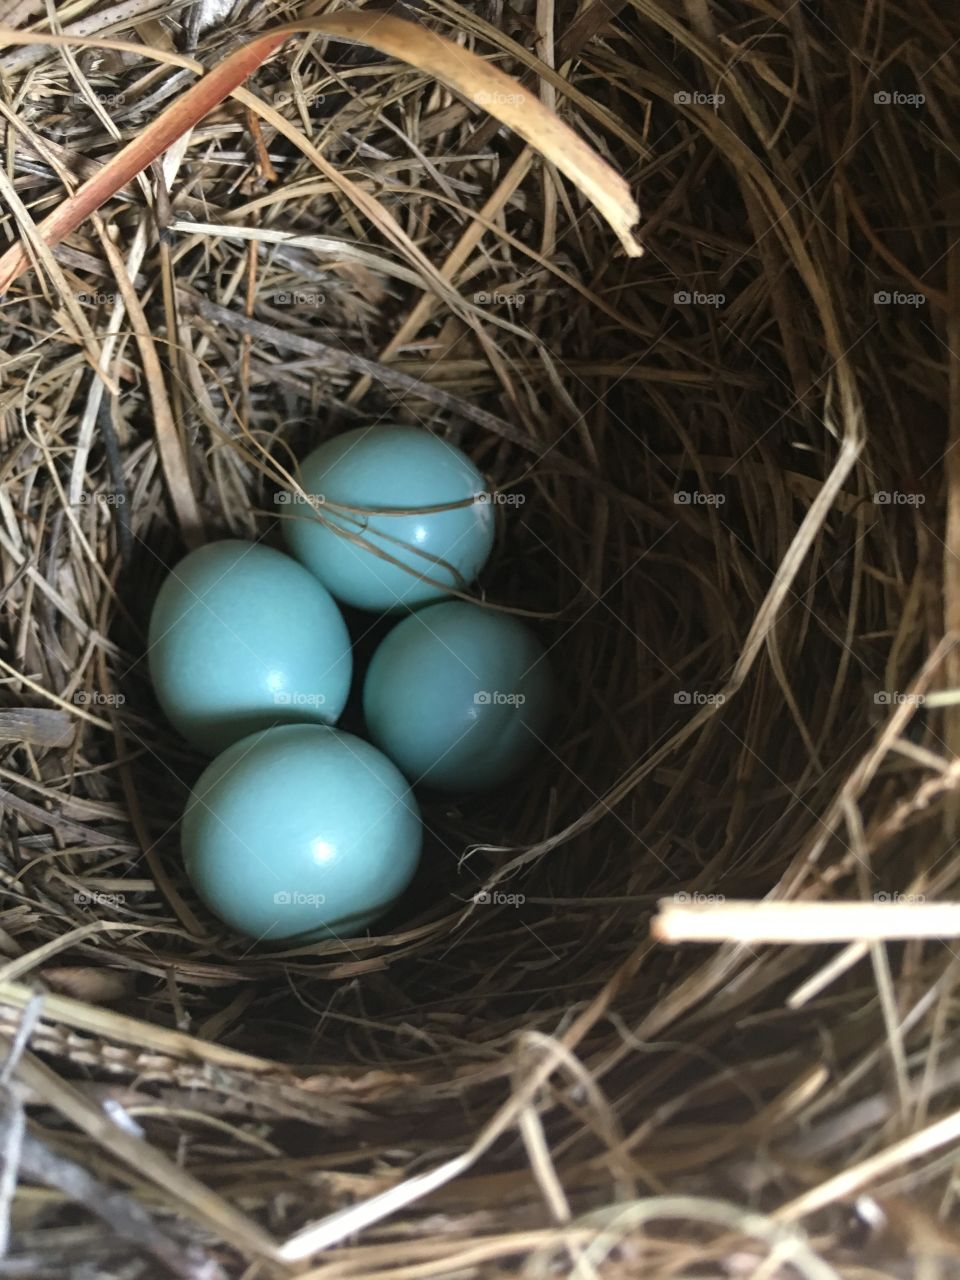 My bluebirds eggs so beautiful 